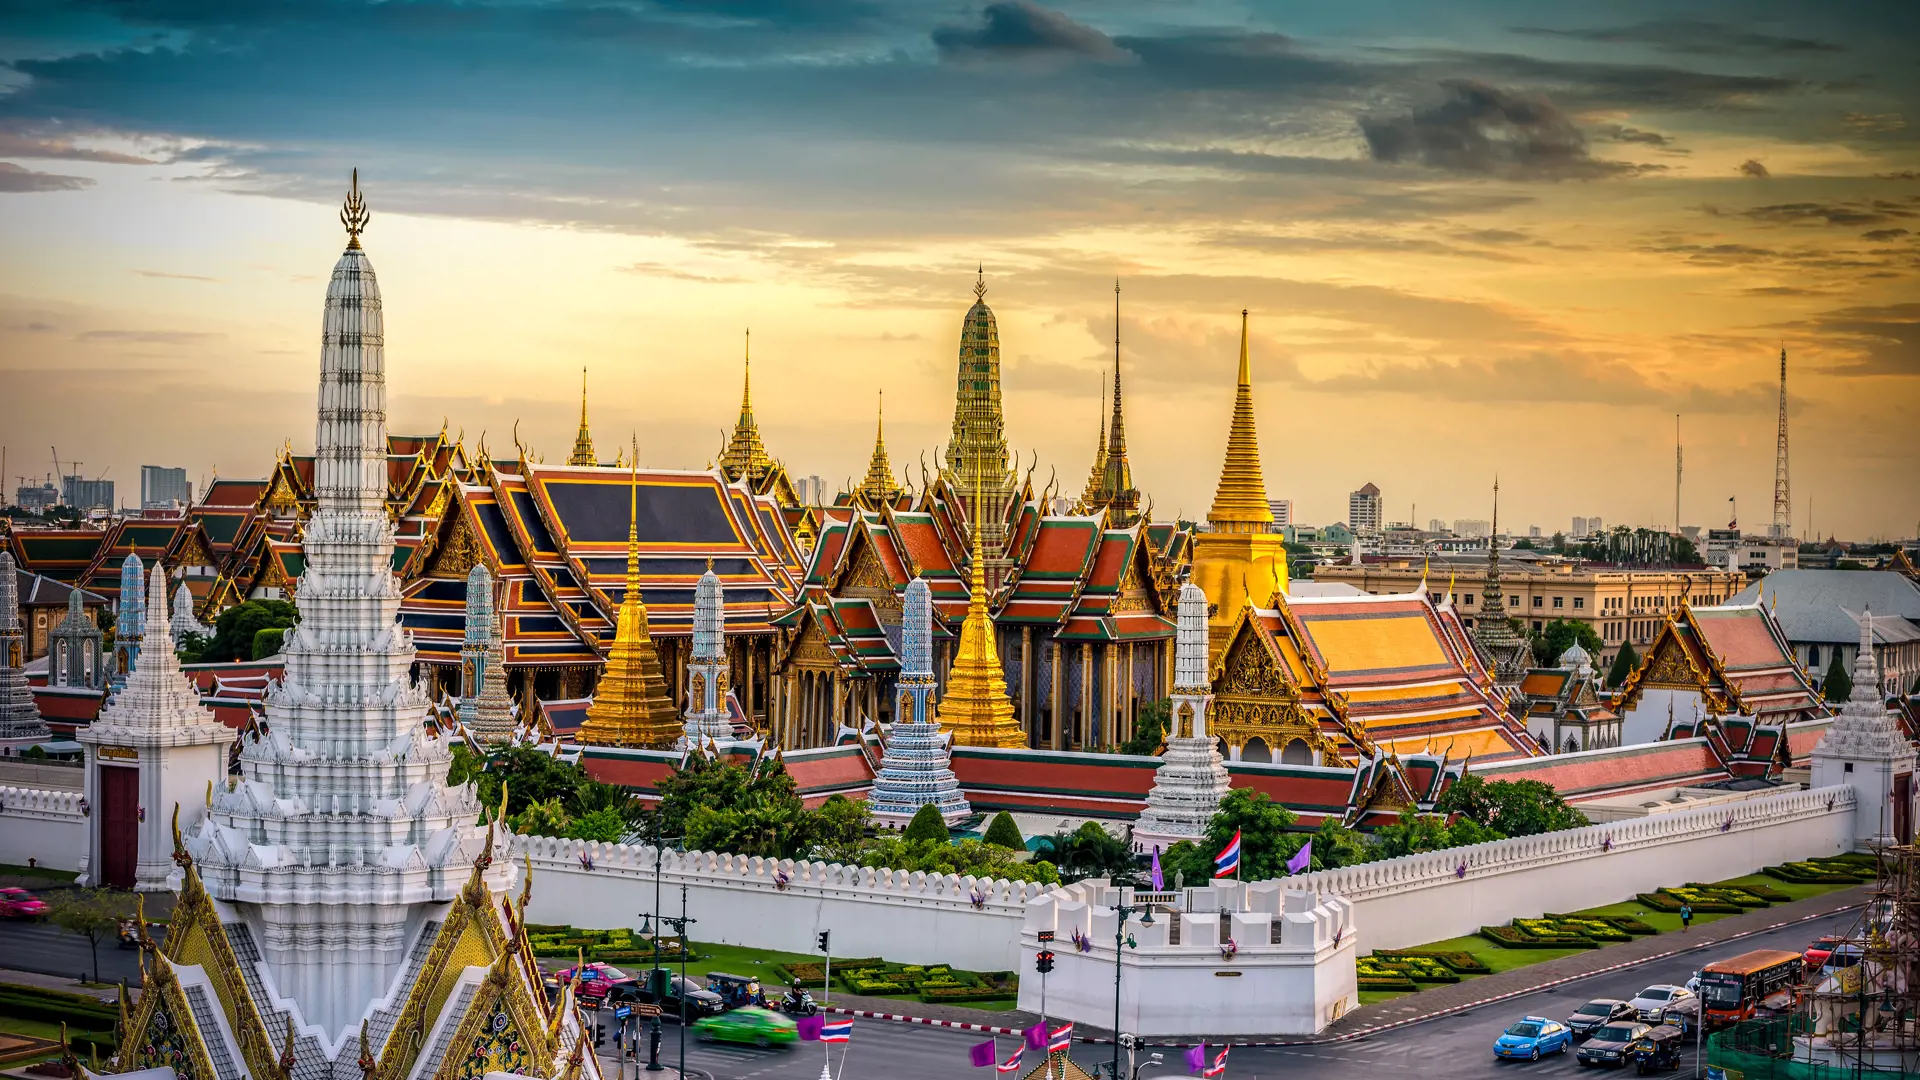 shutterstock_299388287 Grand palace and Wat phra keaw at sunset bangkok, Thailand.jpg